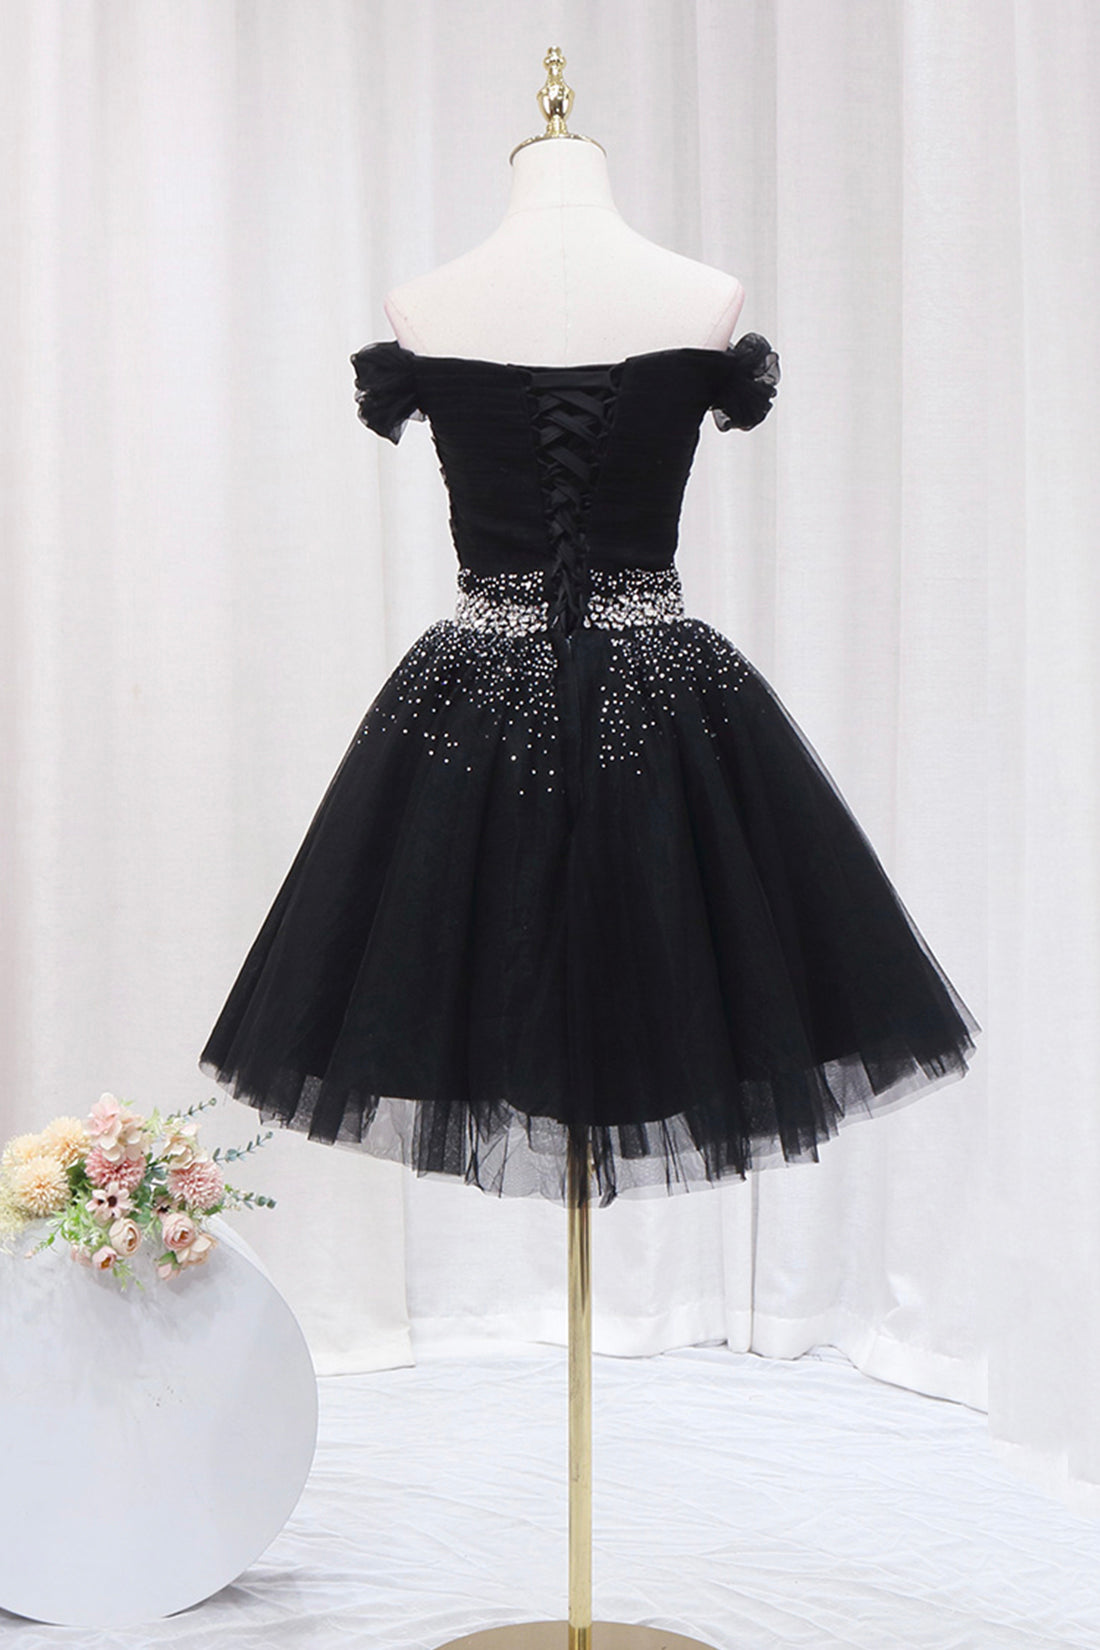 Formall Dresses Short, Black Tulle Beaded Short Prom Dress, Off Shoulder Evening Party Dress